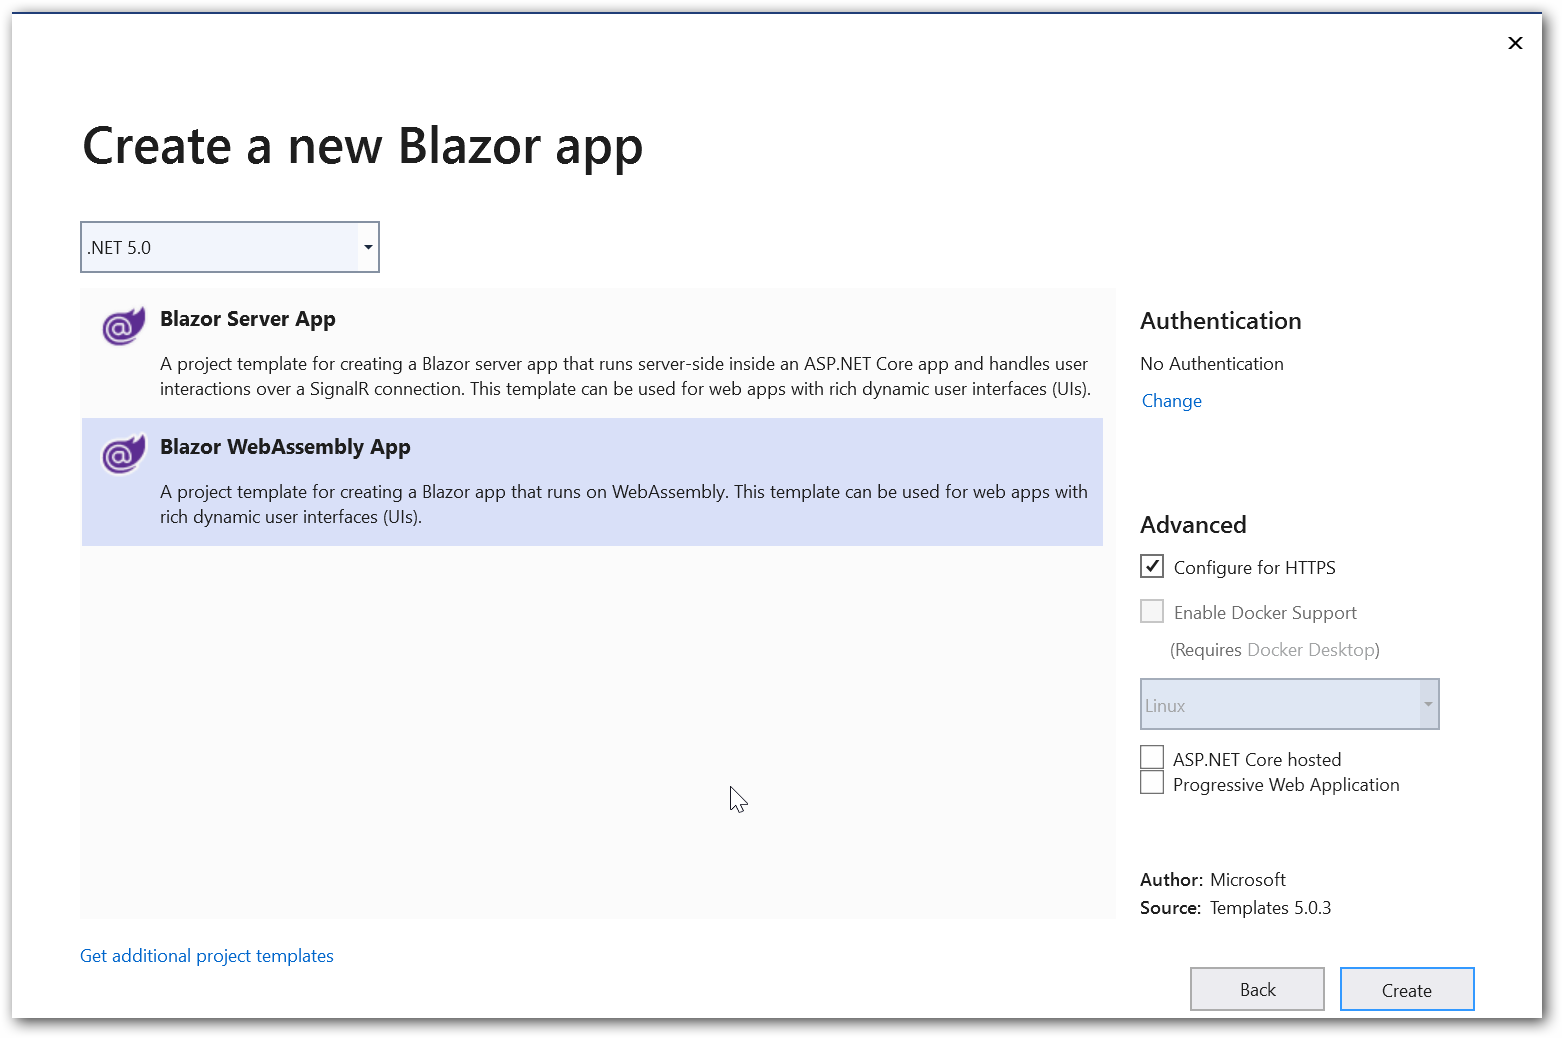 Selecting Blazor WebAssembly App